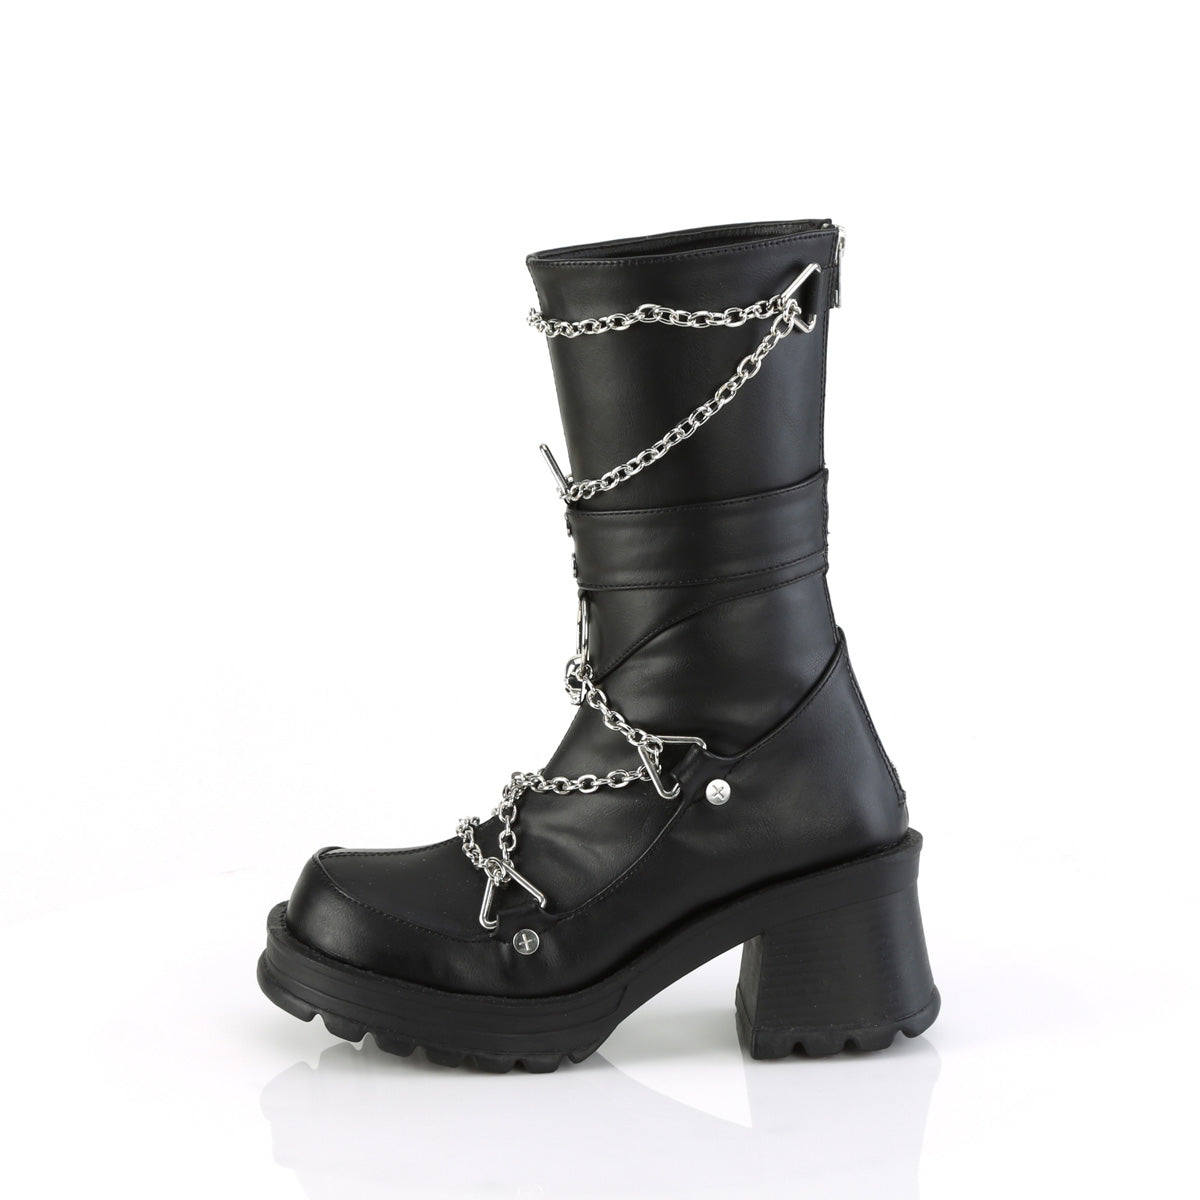 BRATTY-120 Demonia Black Vegan Leather Women's Mid-Calf & Knee High Boots [Demonia Cult Alternative Footwear]